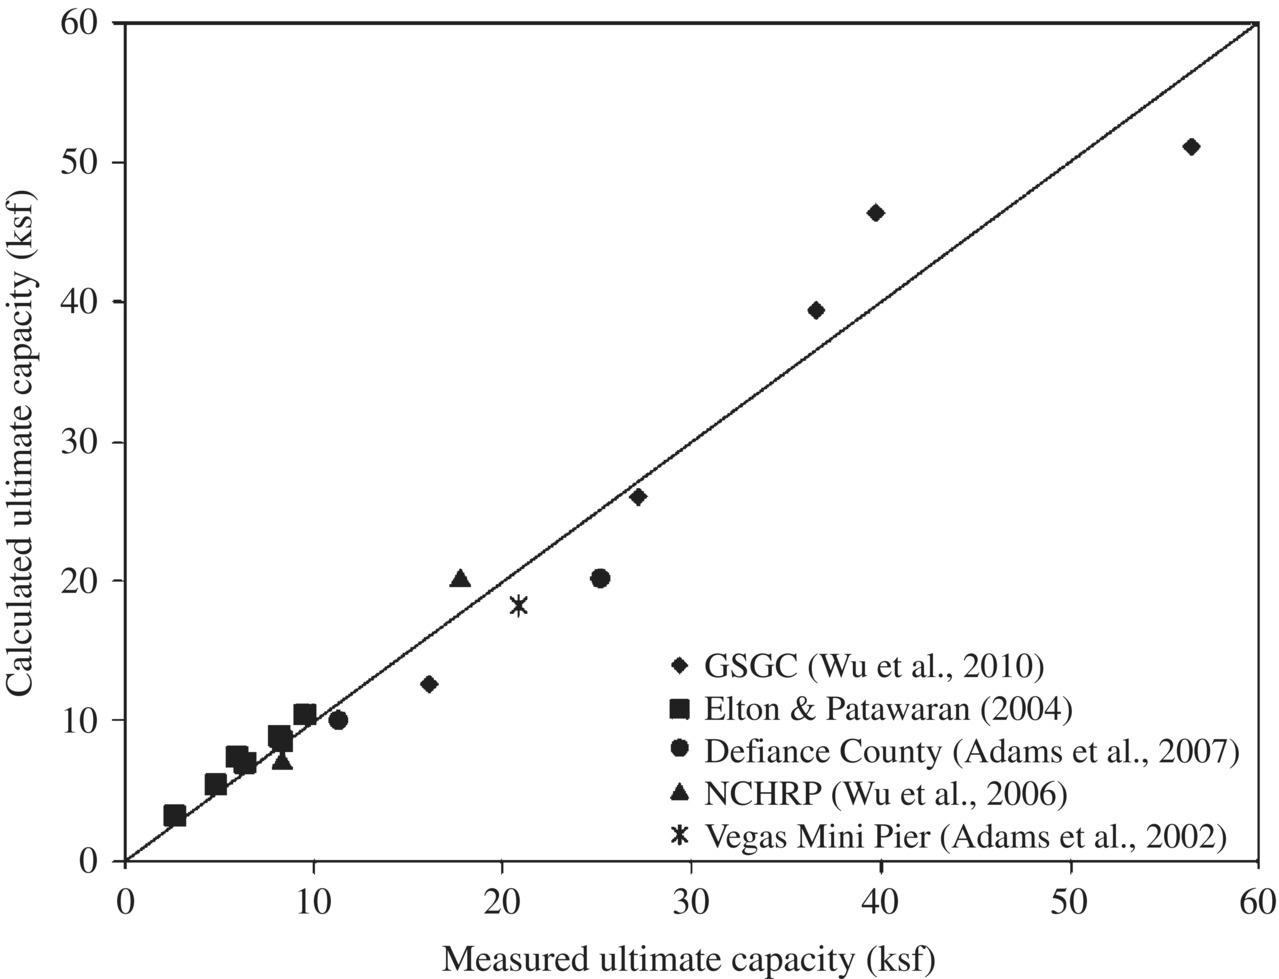 Calculated ultimate capacity vs. measured ultimate capacity displaying an ascending line having markers representing for GSGC (Wu et al., 2010), Elton & Patawaran (2004), Defiance County (Adams et al., 2007), etc.